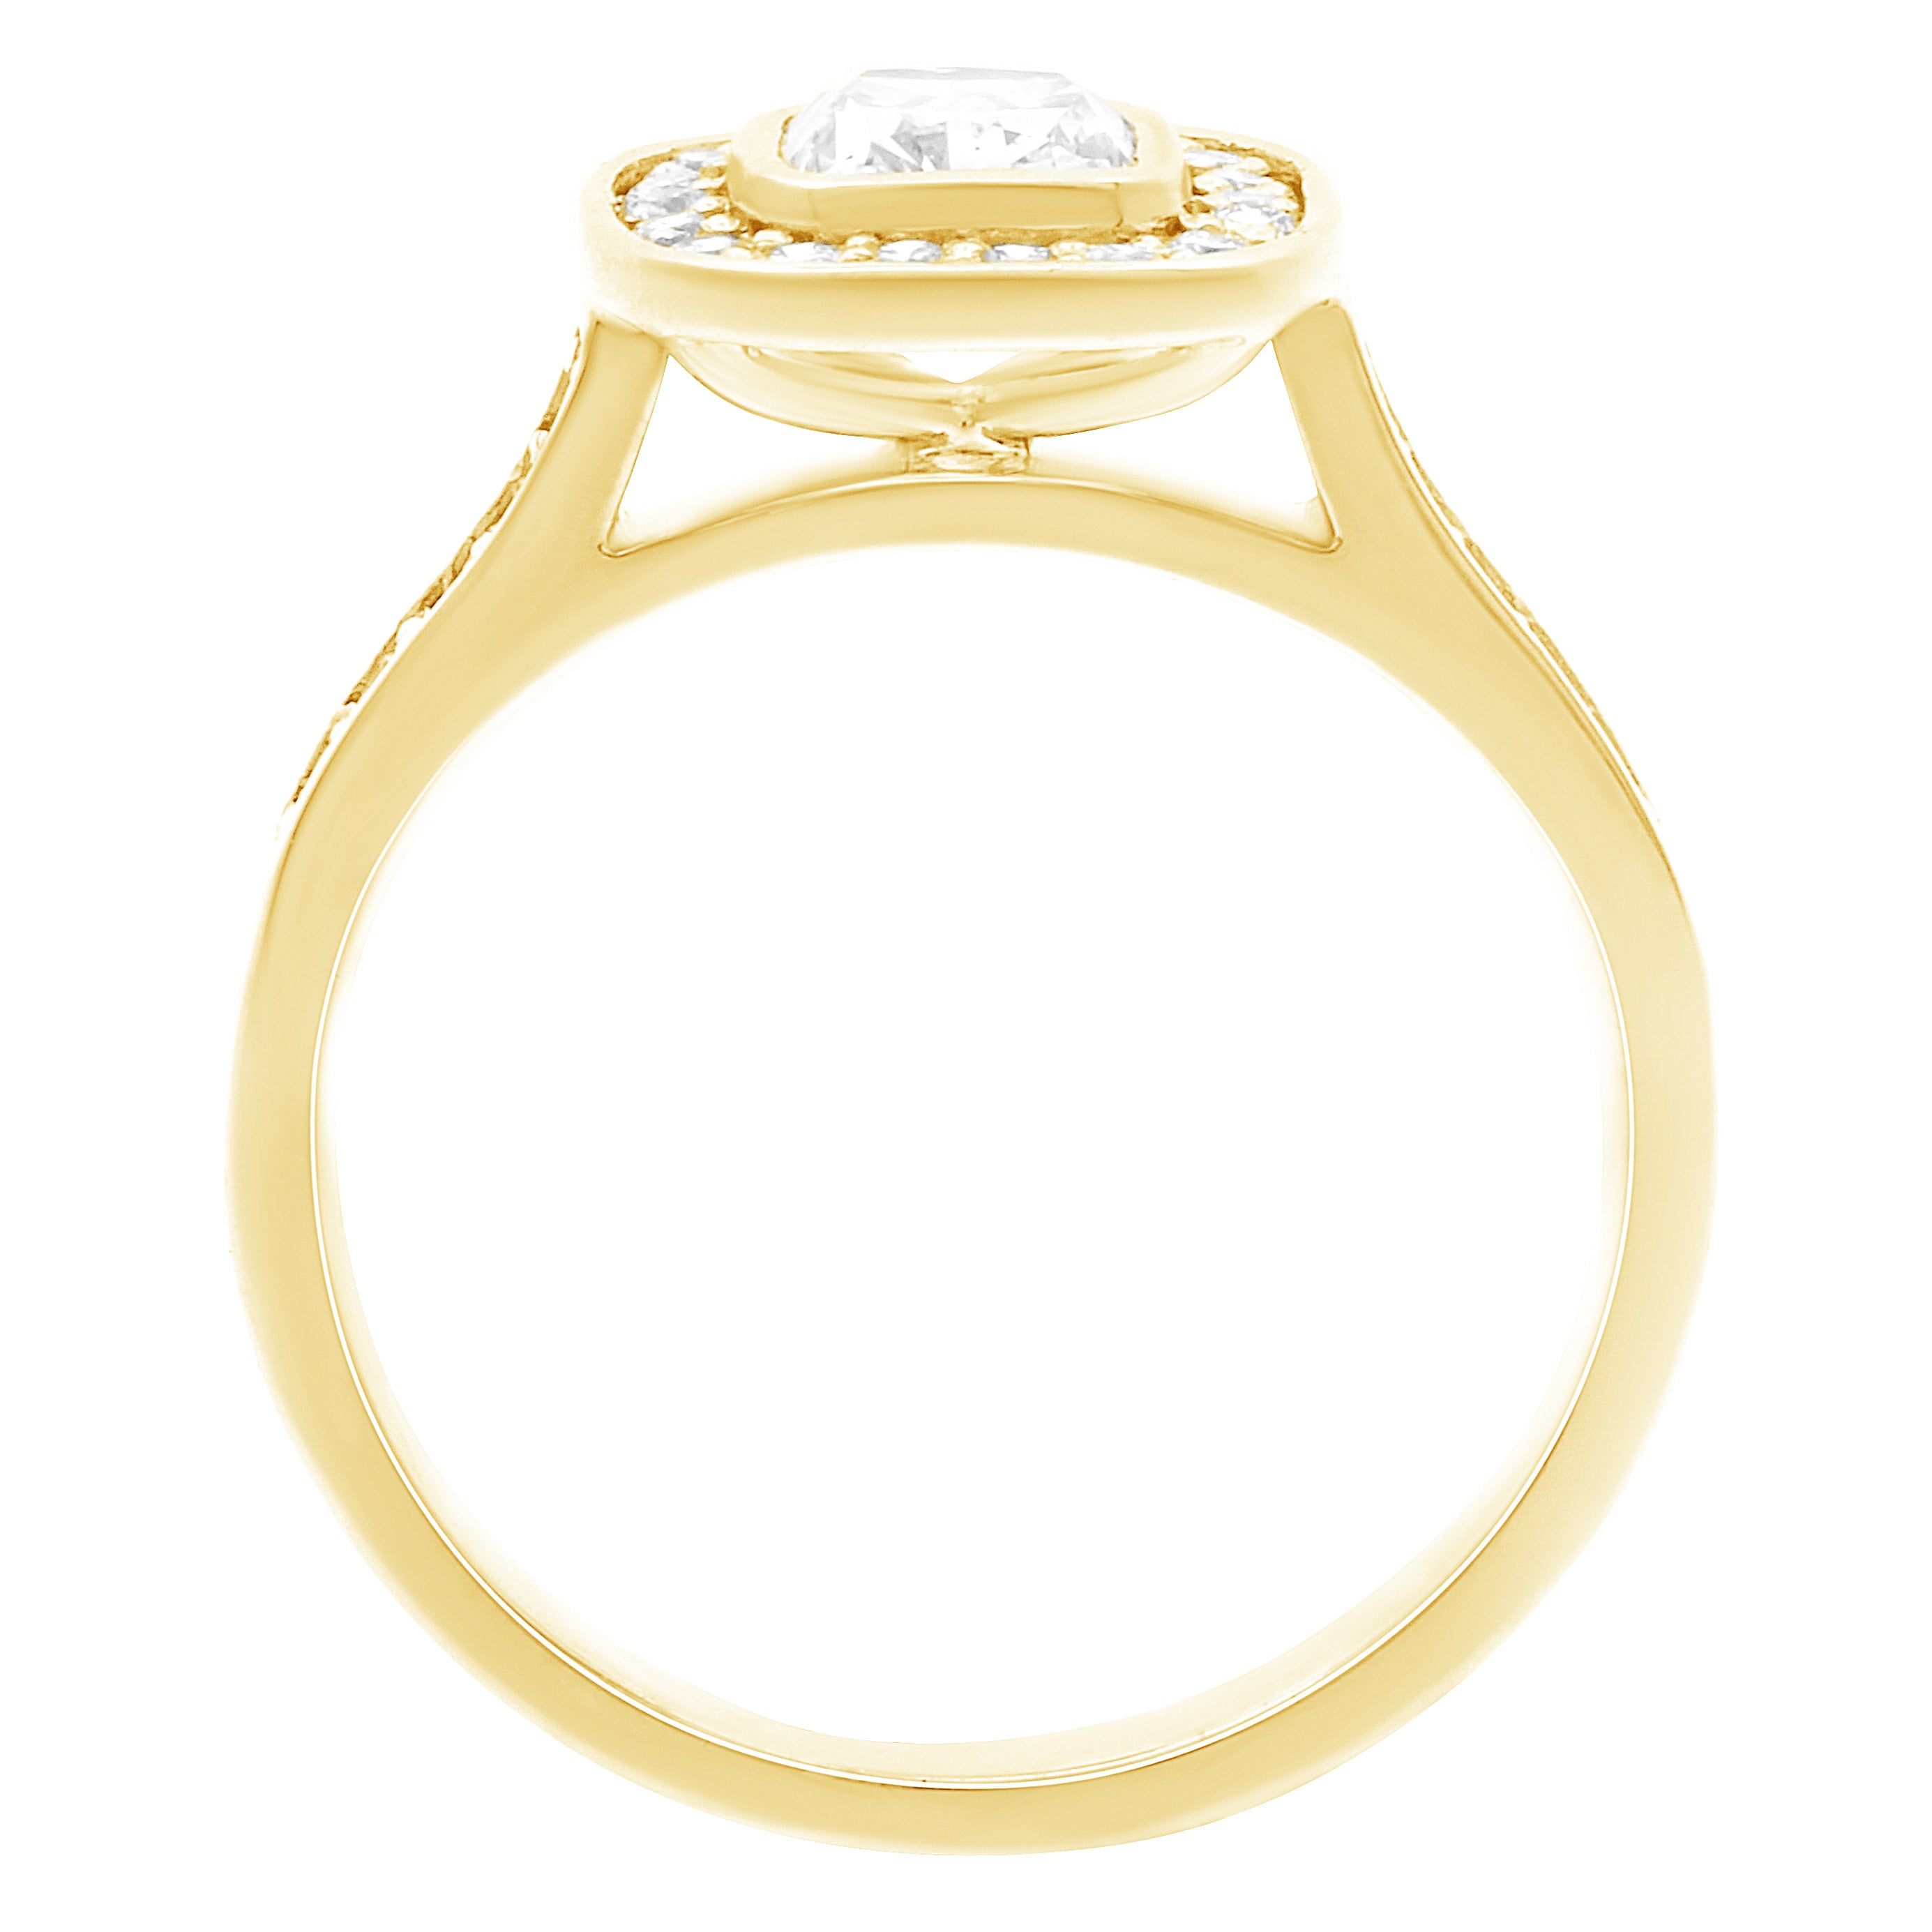 Cushion Cut Bezel Diamond Ring in yellow gold standing upright